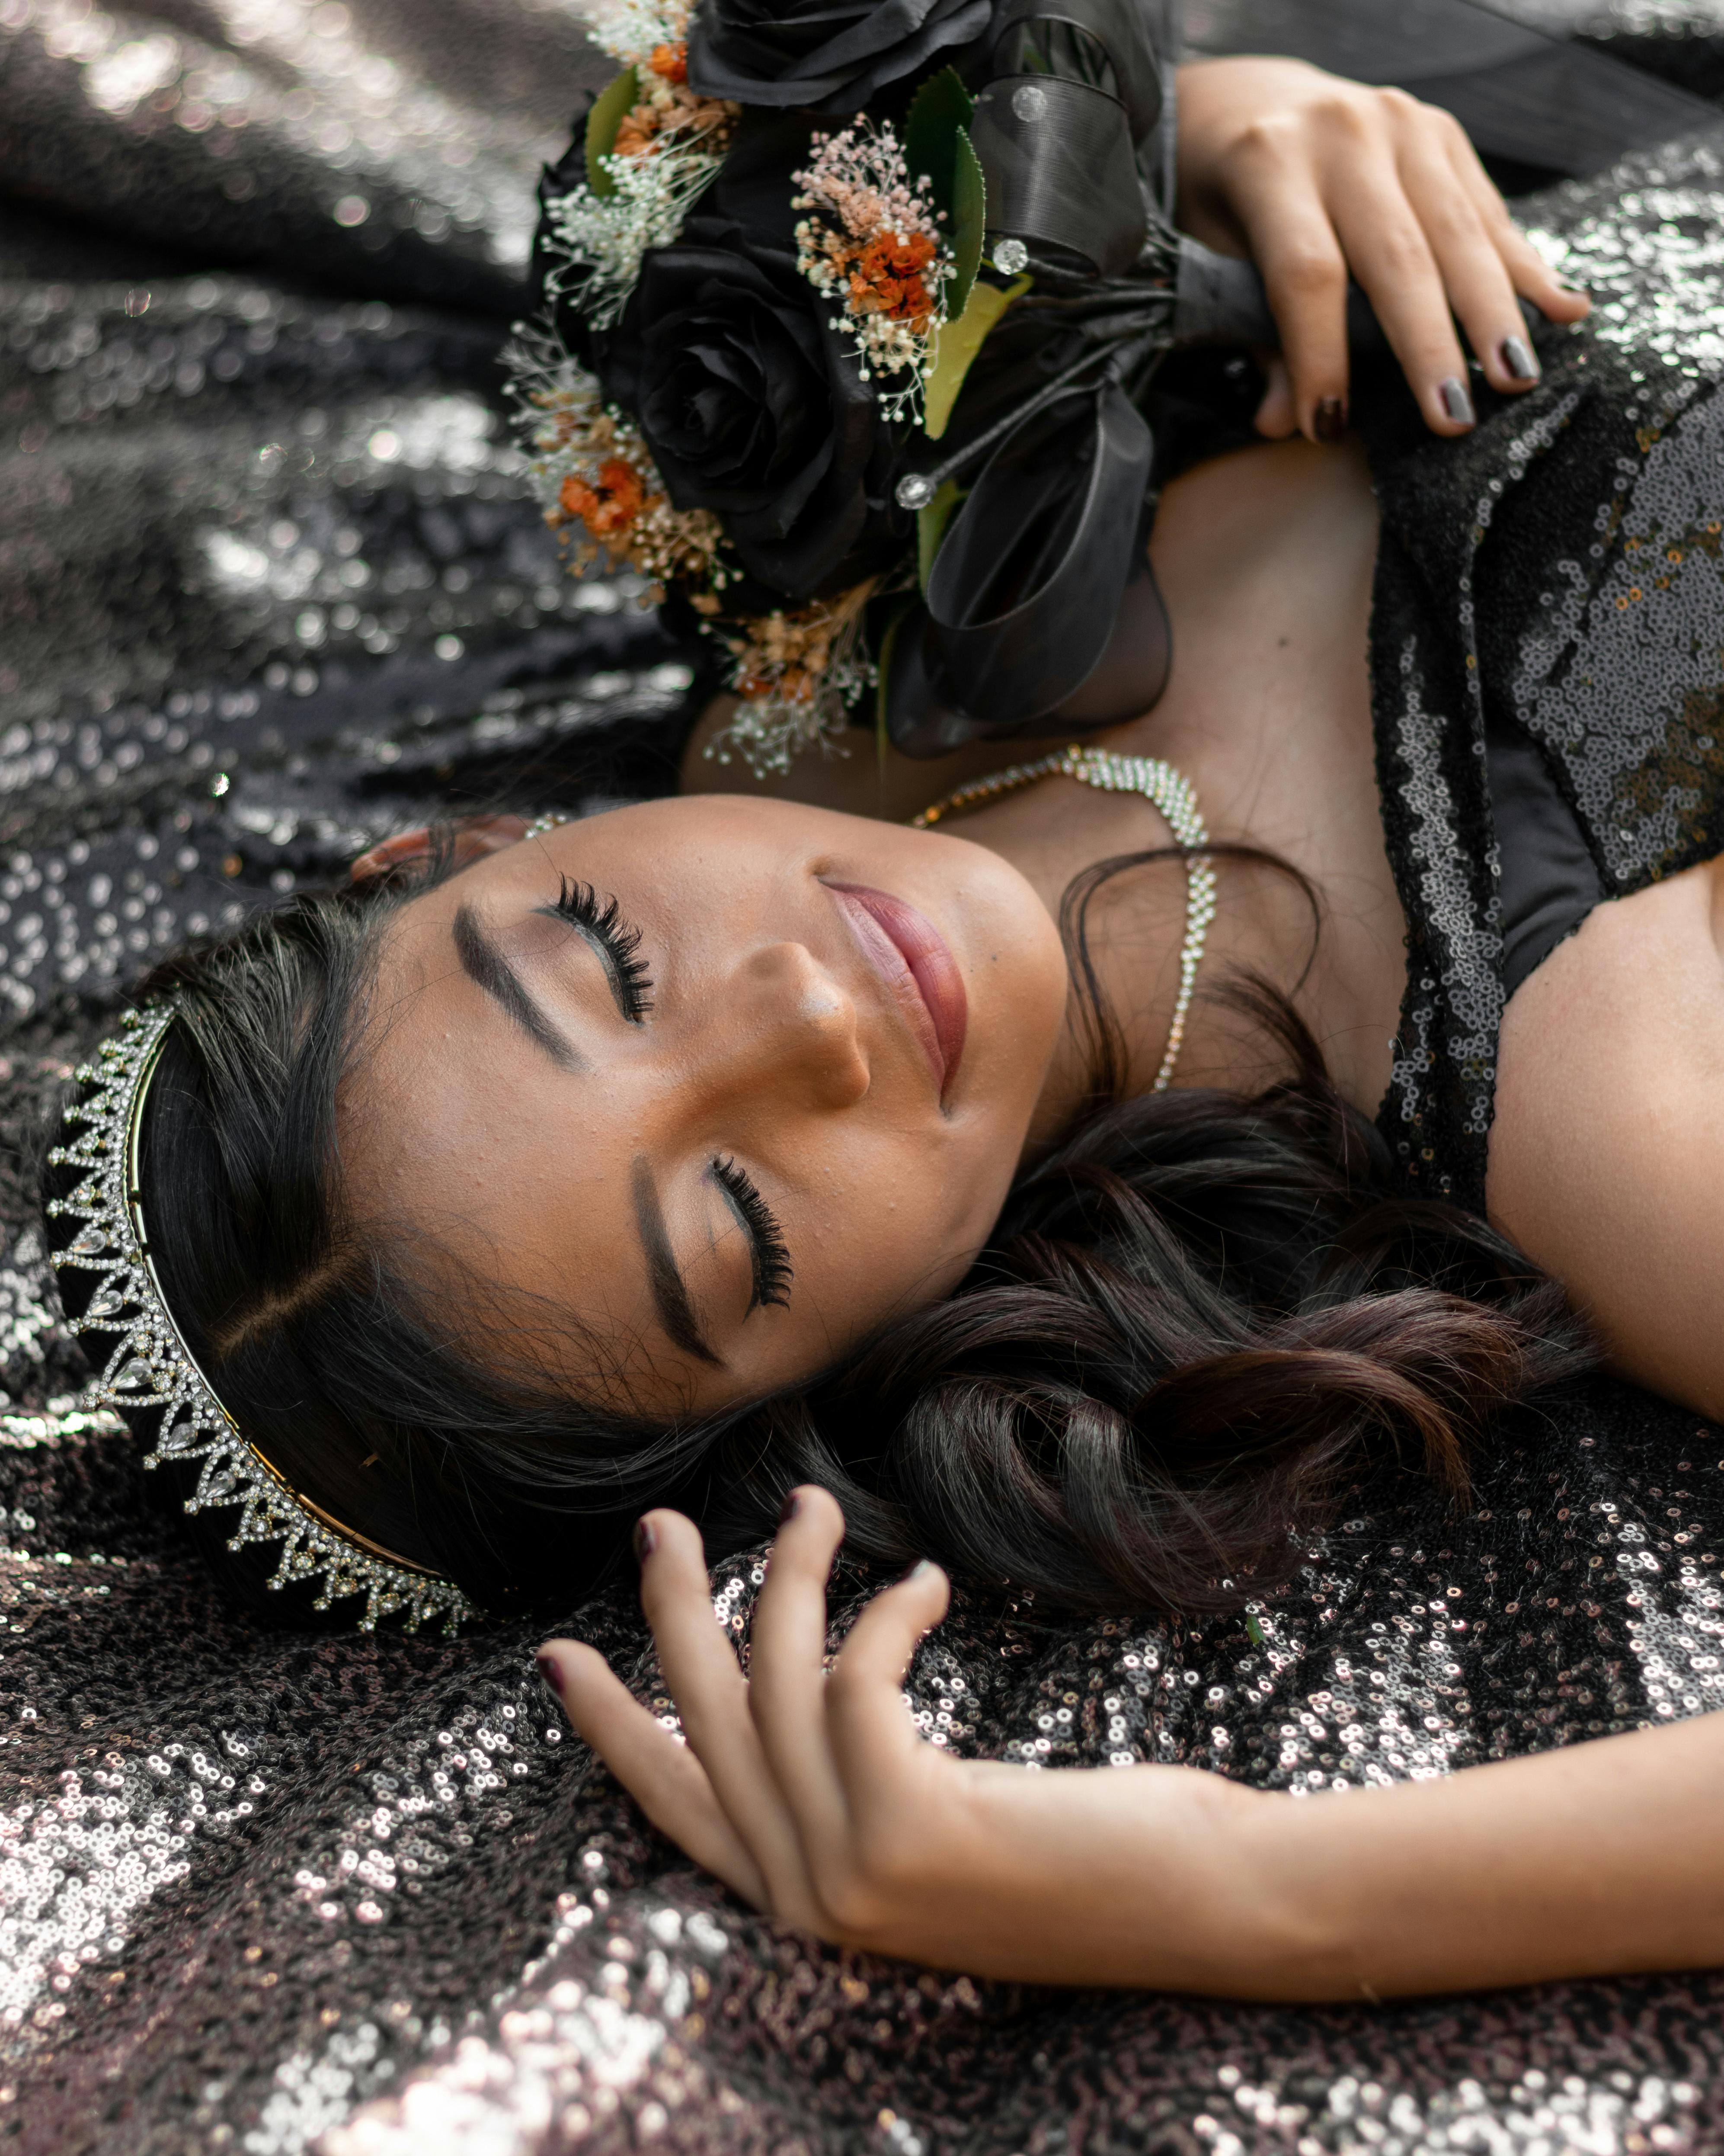 poses with crown || poses for girls || birthday poses || RADHA RAJVANSHI ||  - YouTube